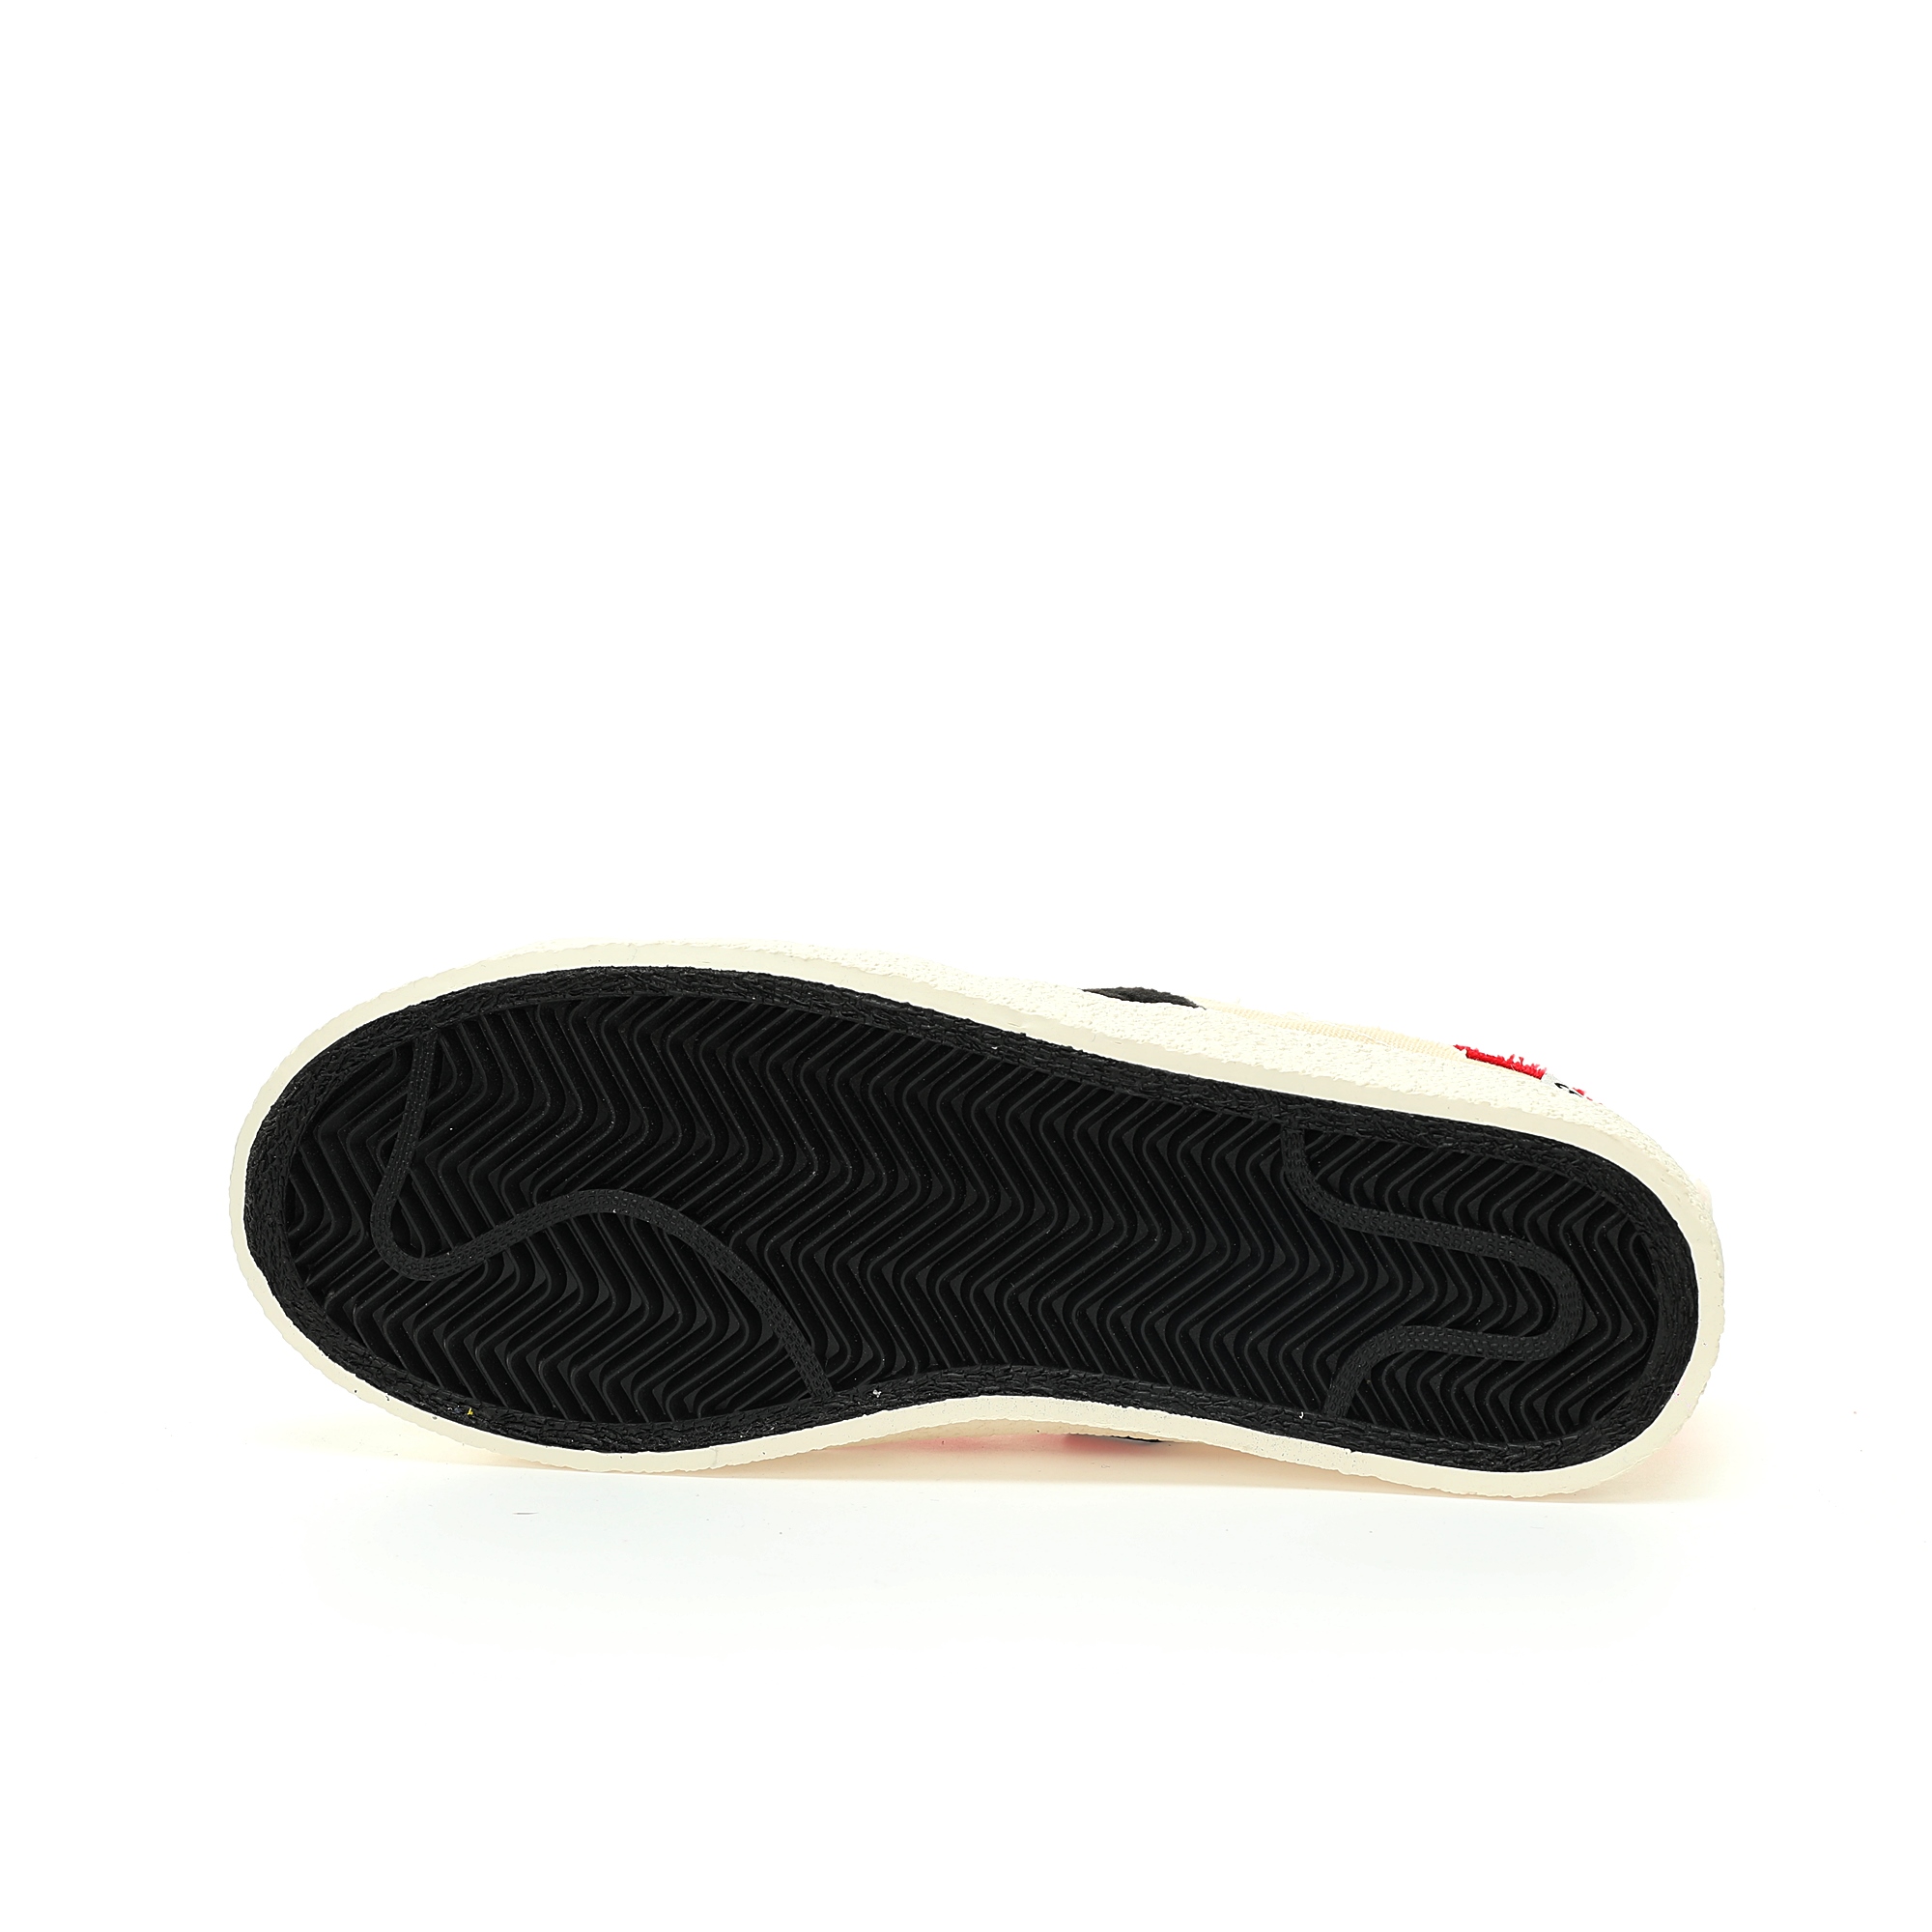 Replica Adidas co-branded board shoes canvas rice white black mandarin duck